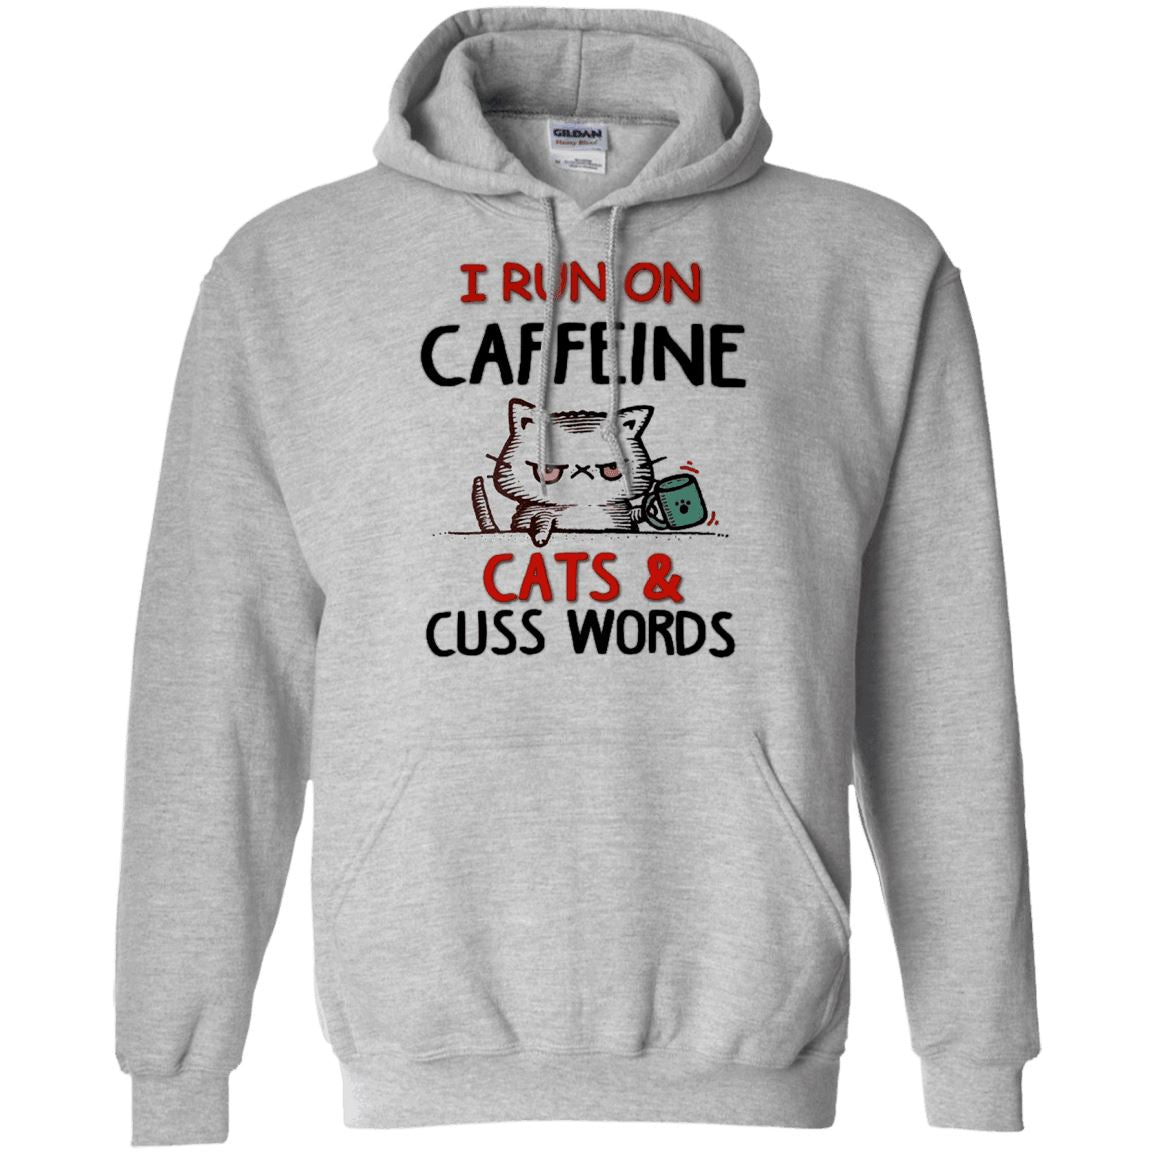 Cat Tee - I Run On Caffeine, Cats & Cuss Words - CatsForLife